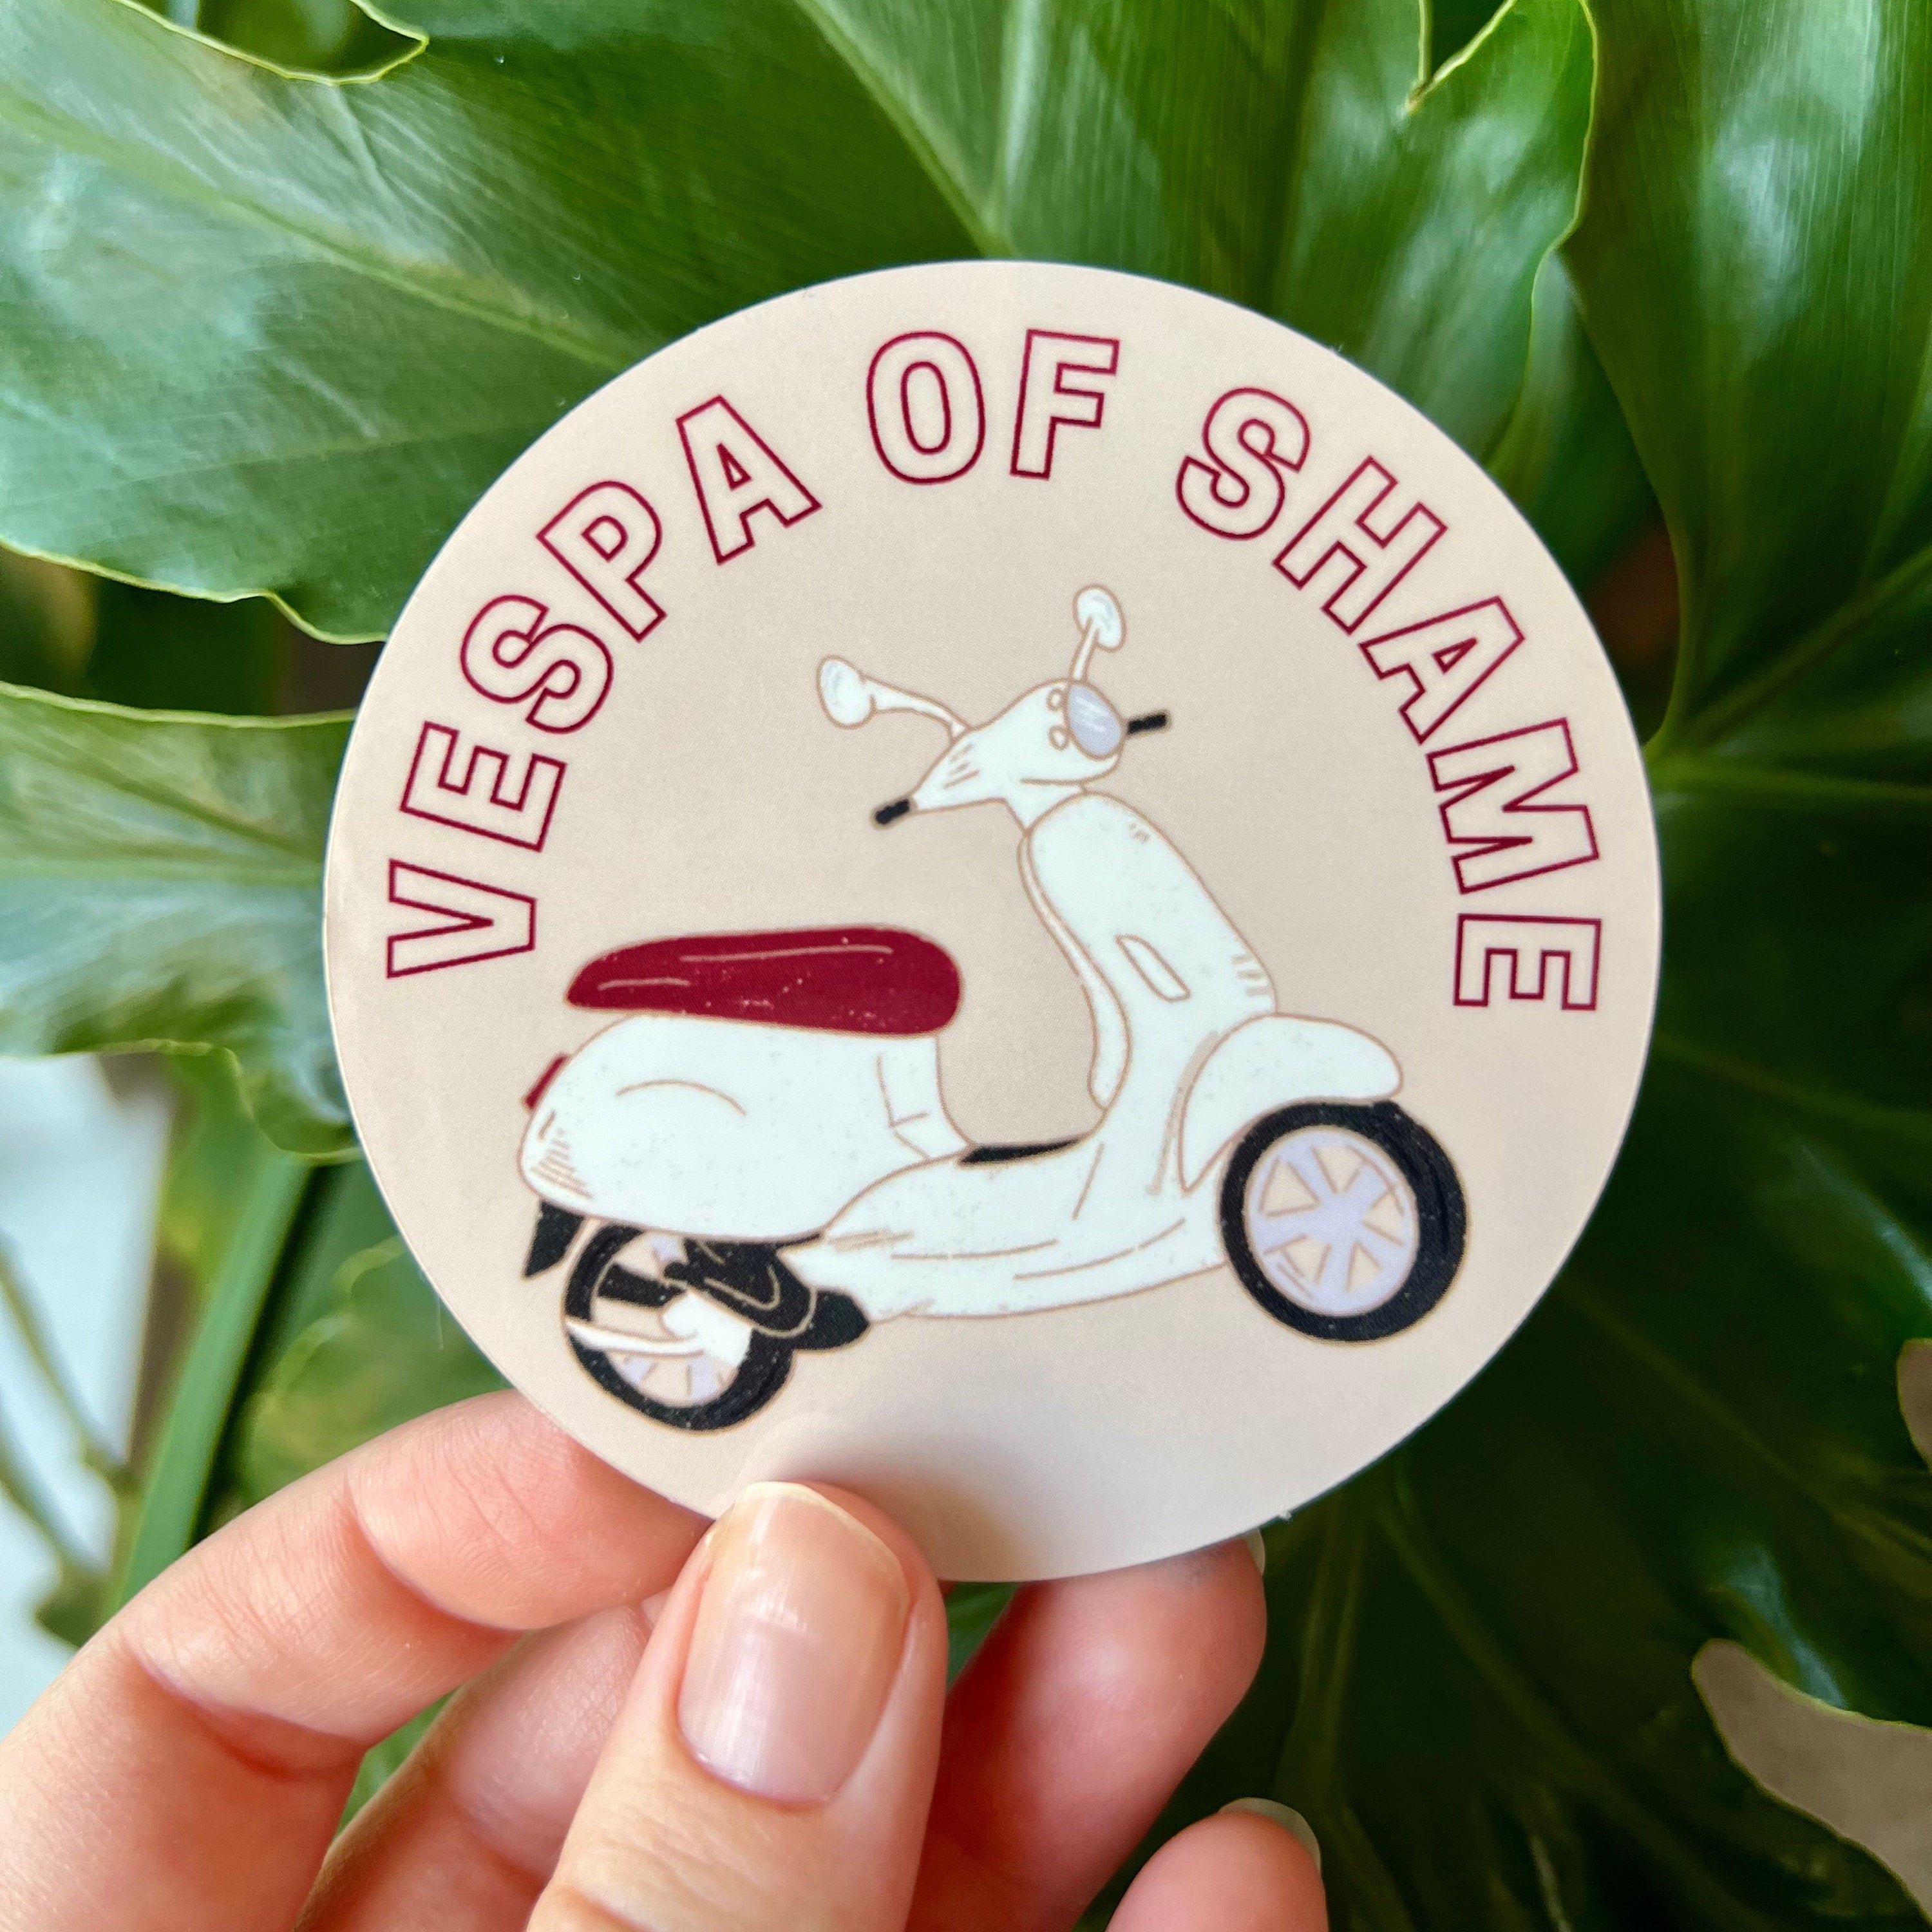 Vespa of Shame sticker